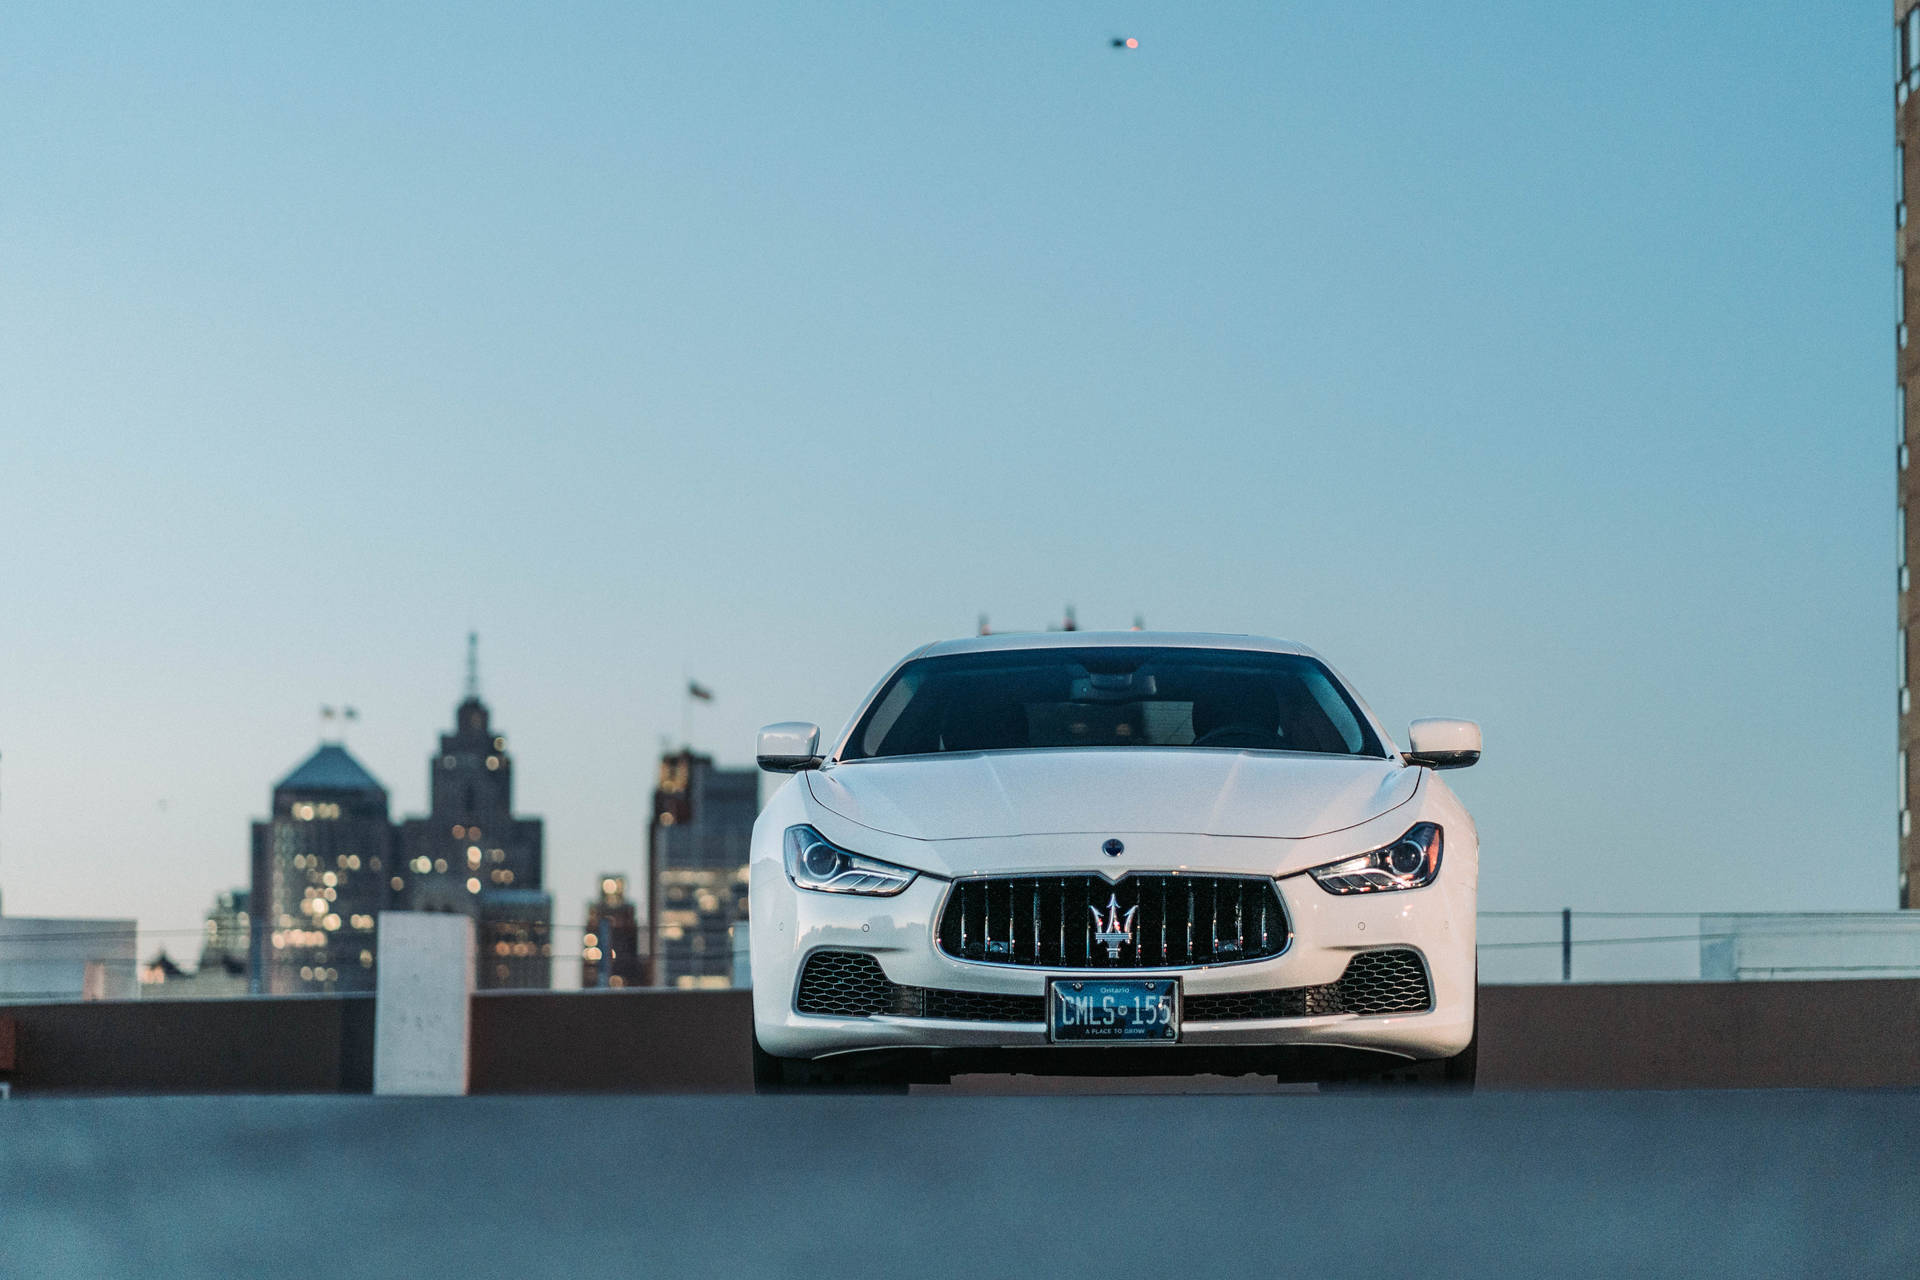 Maserati Car Rooftop Shot